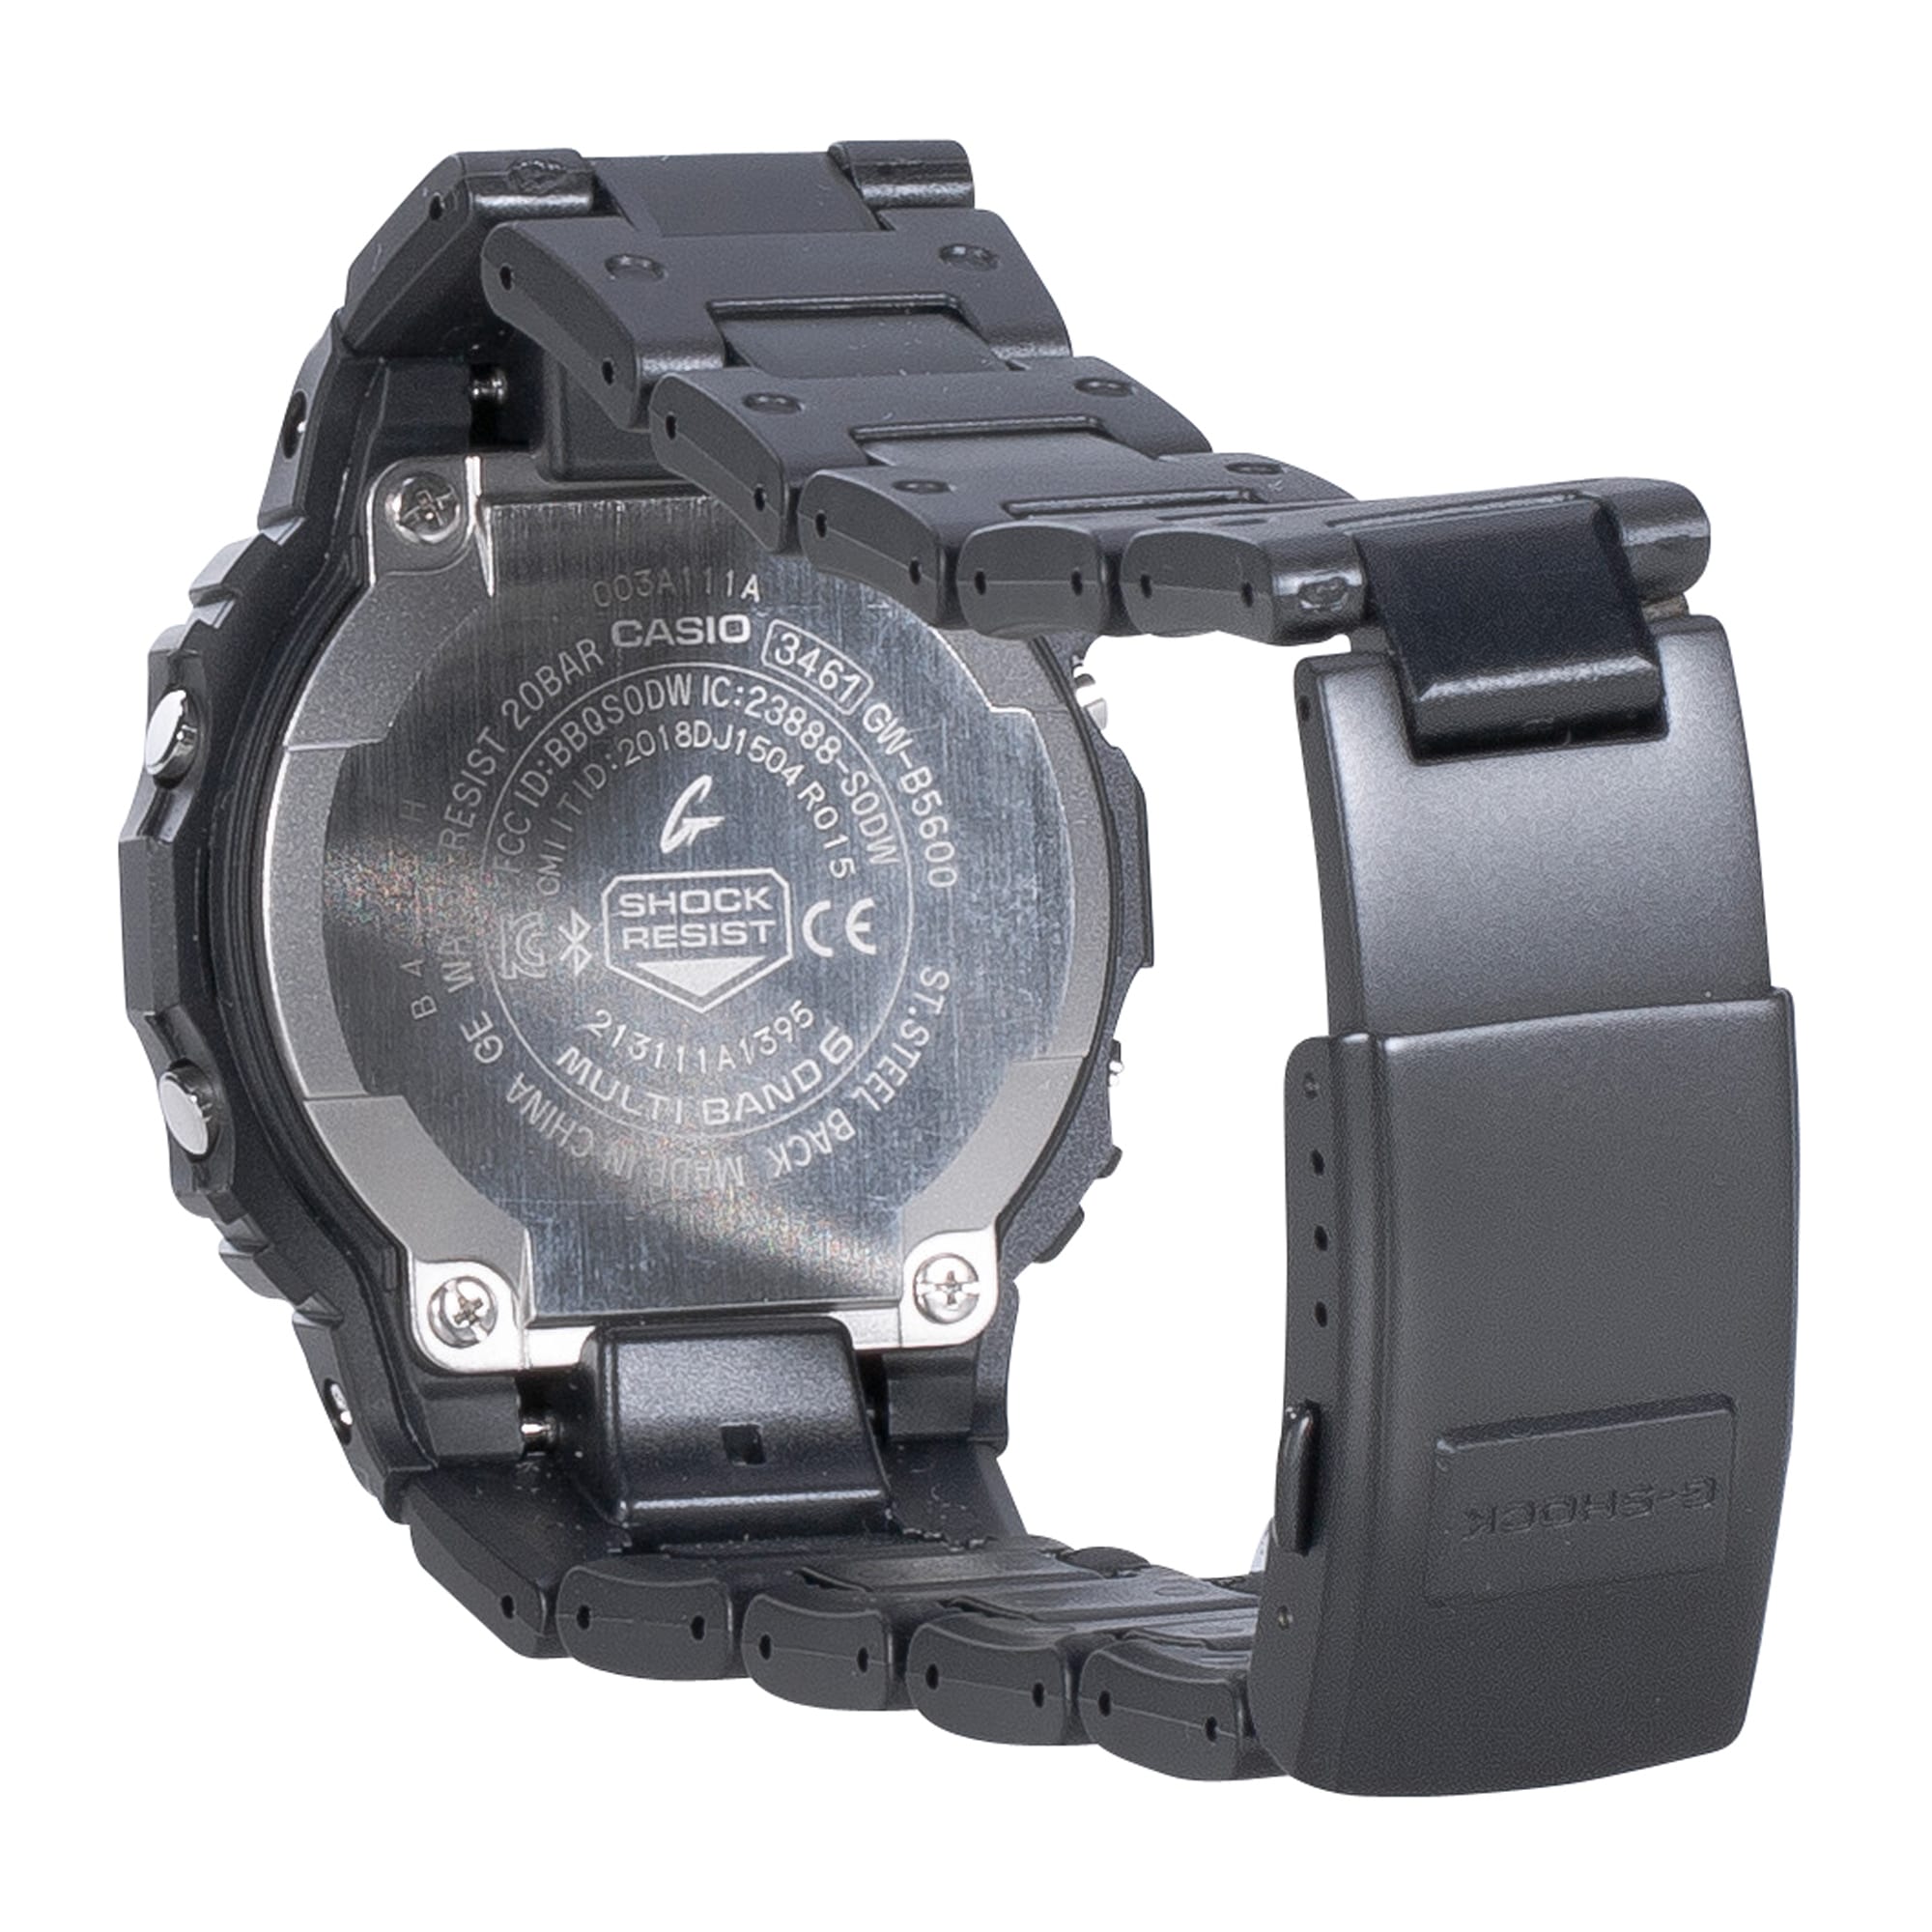 Purchase the Casio Watch G-Shock The Origin GW-B5600BC-1BER blac